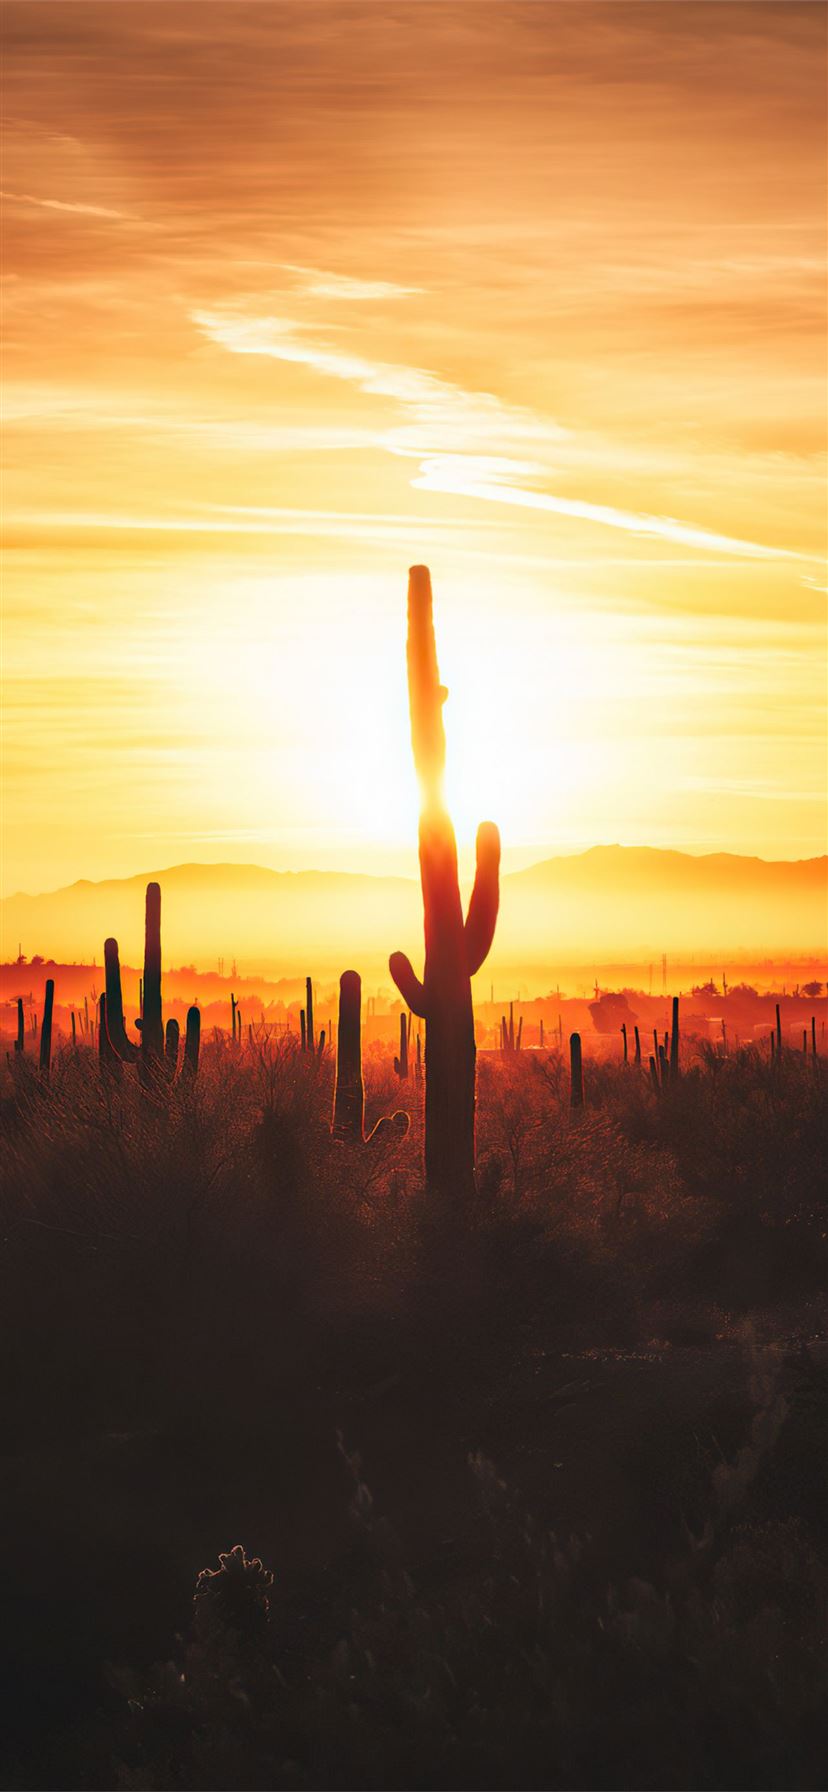 cactus field sunset 4k iPhone 11 Wallpaper Free Download